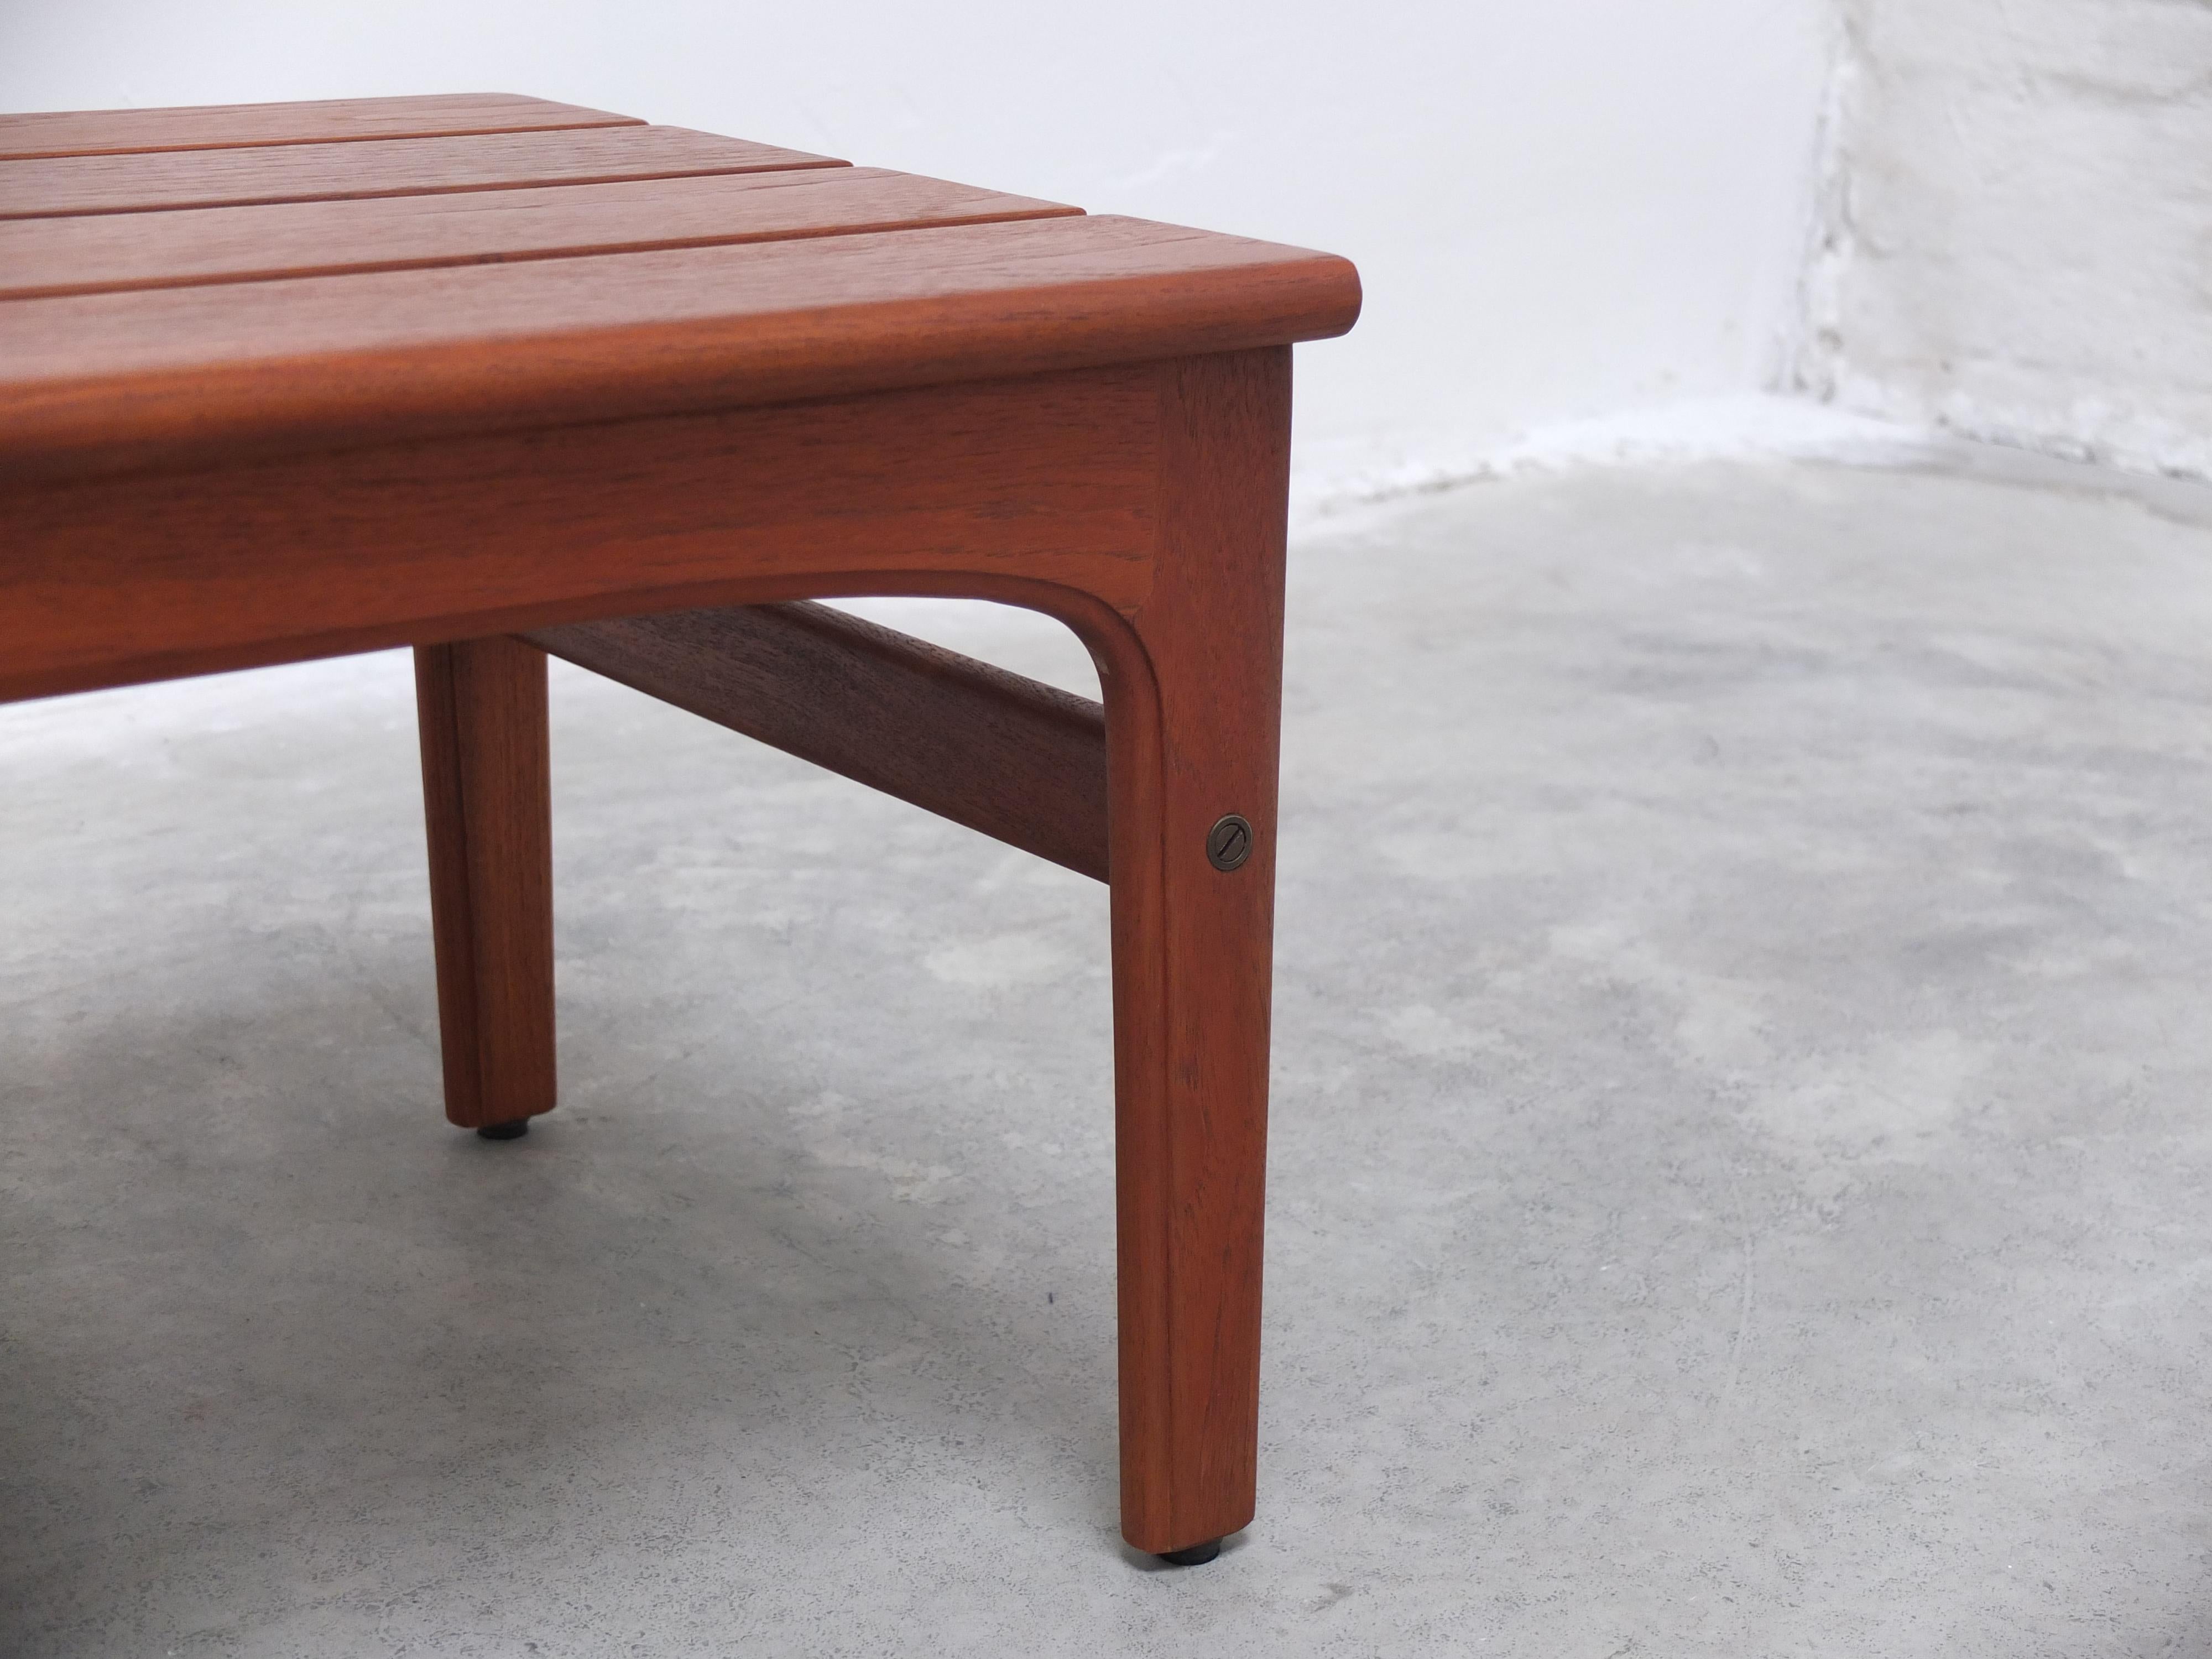 Teak Slatted Bench or Coffee Table by Yngvar Sandström for AB Sëffle, 1960s For Sale 3